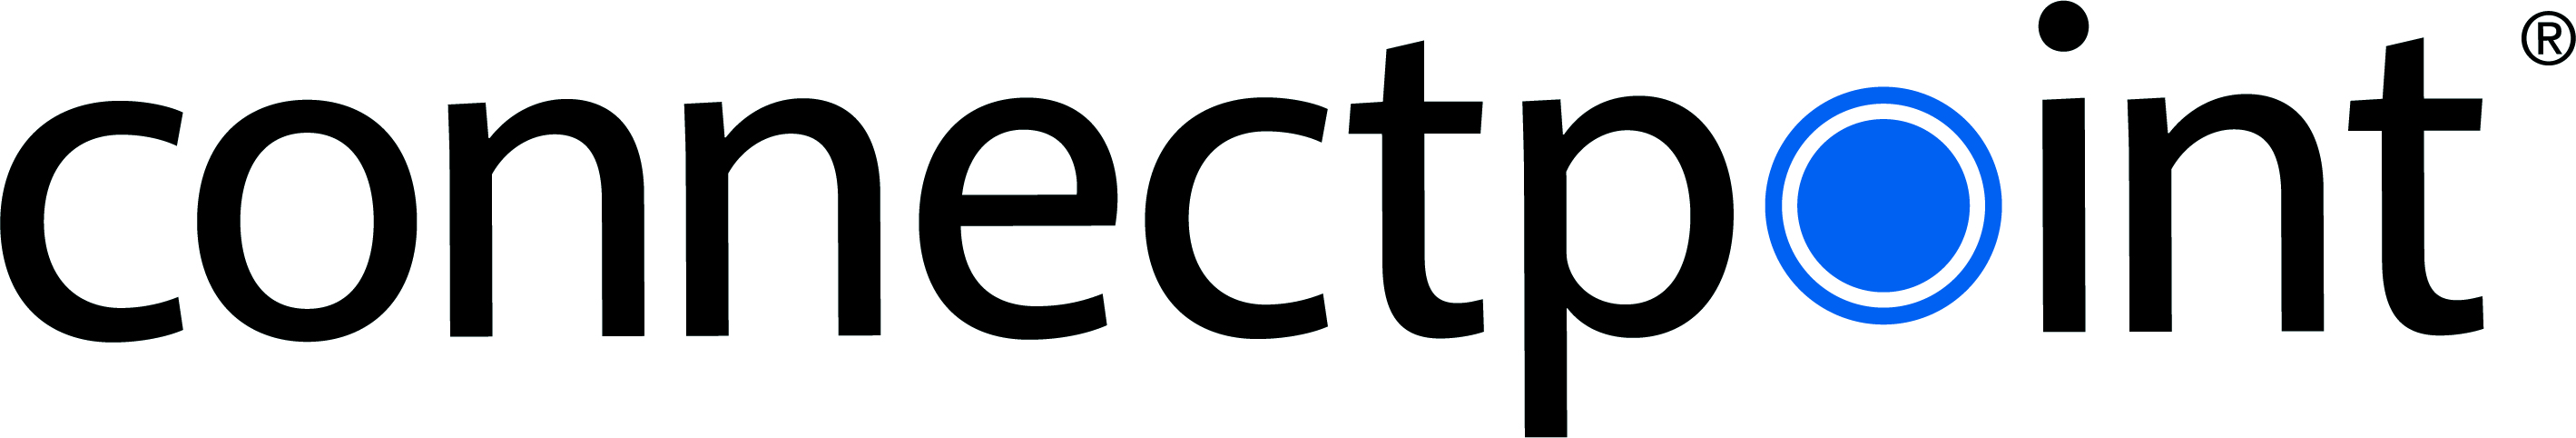 Connectpoint logo